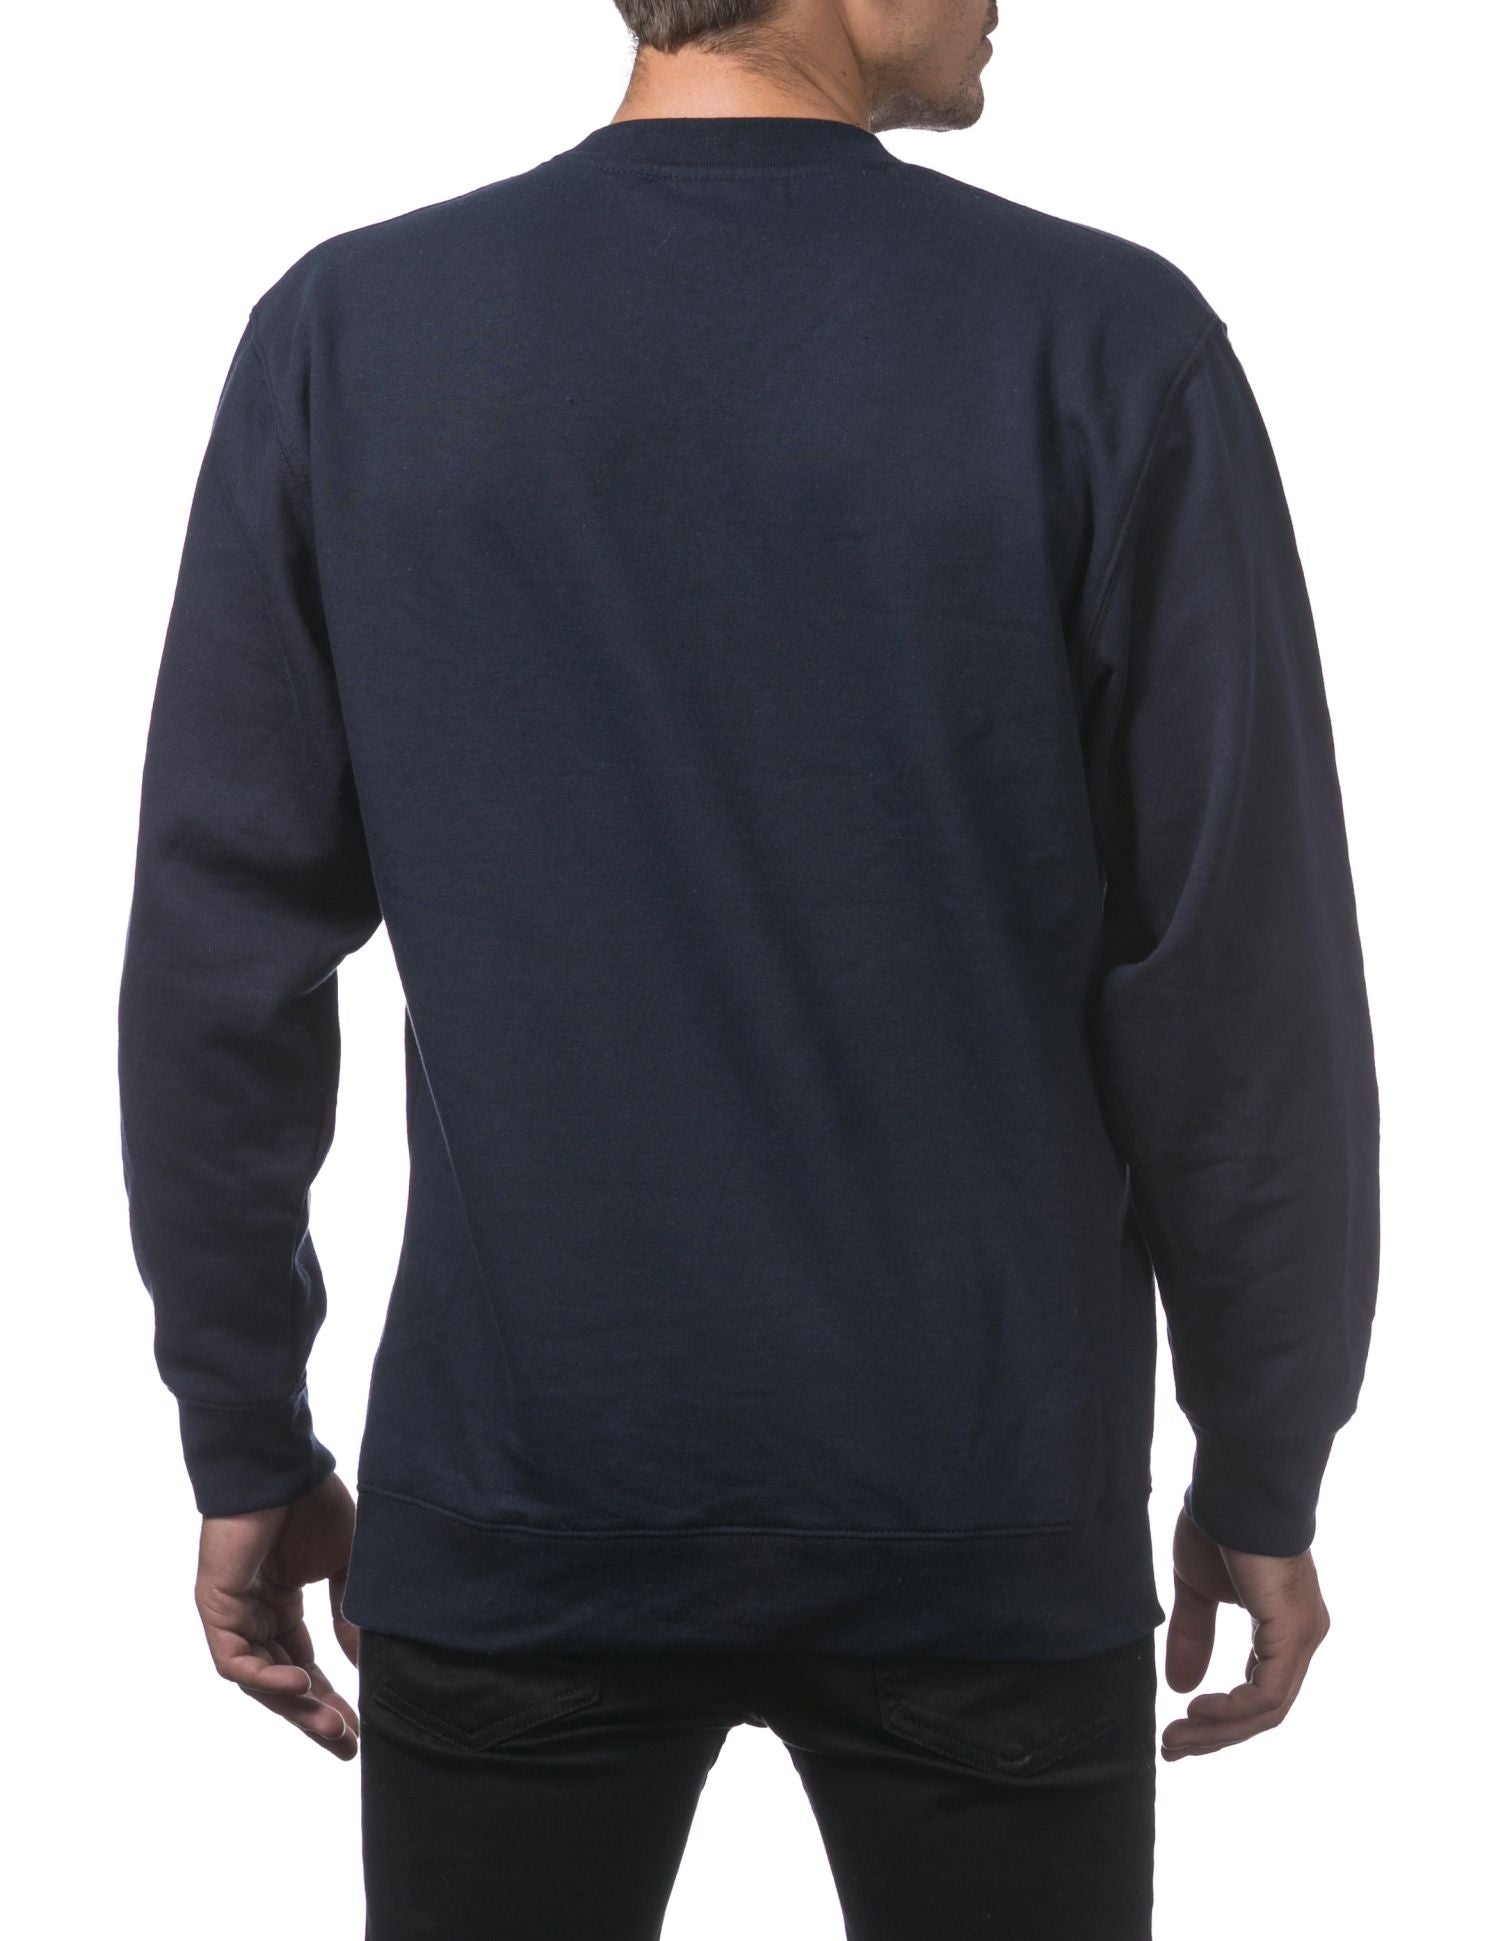 Pro Club Men's Comfort Crew Neck Fleece Pullover Sweater - Navy - Large - Pro-Distributing